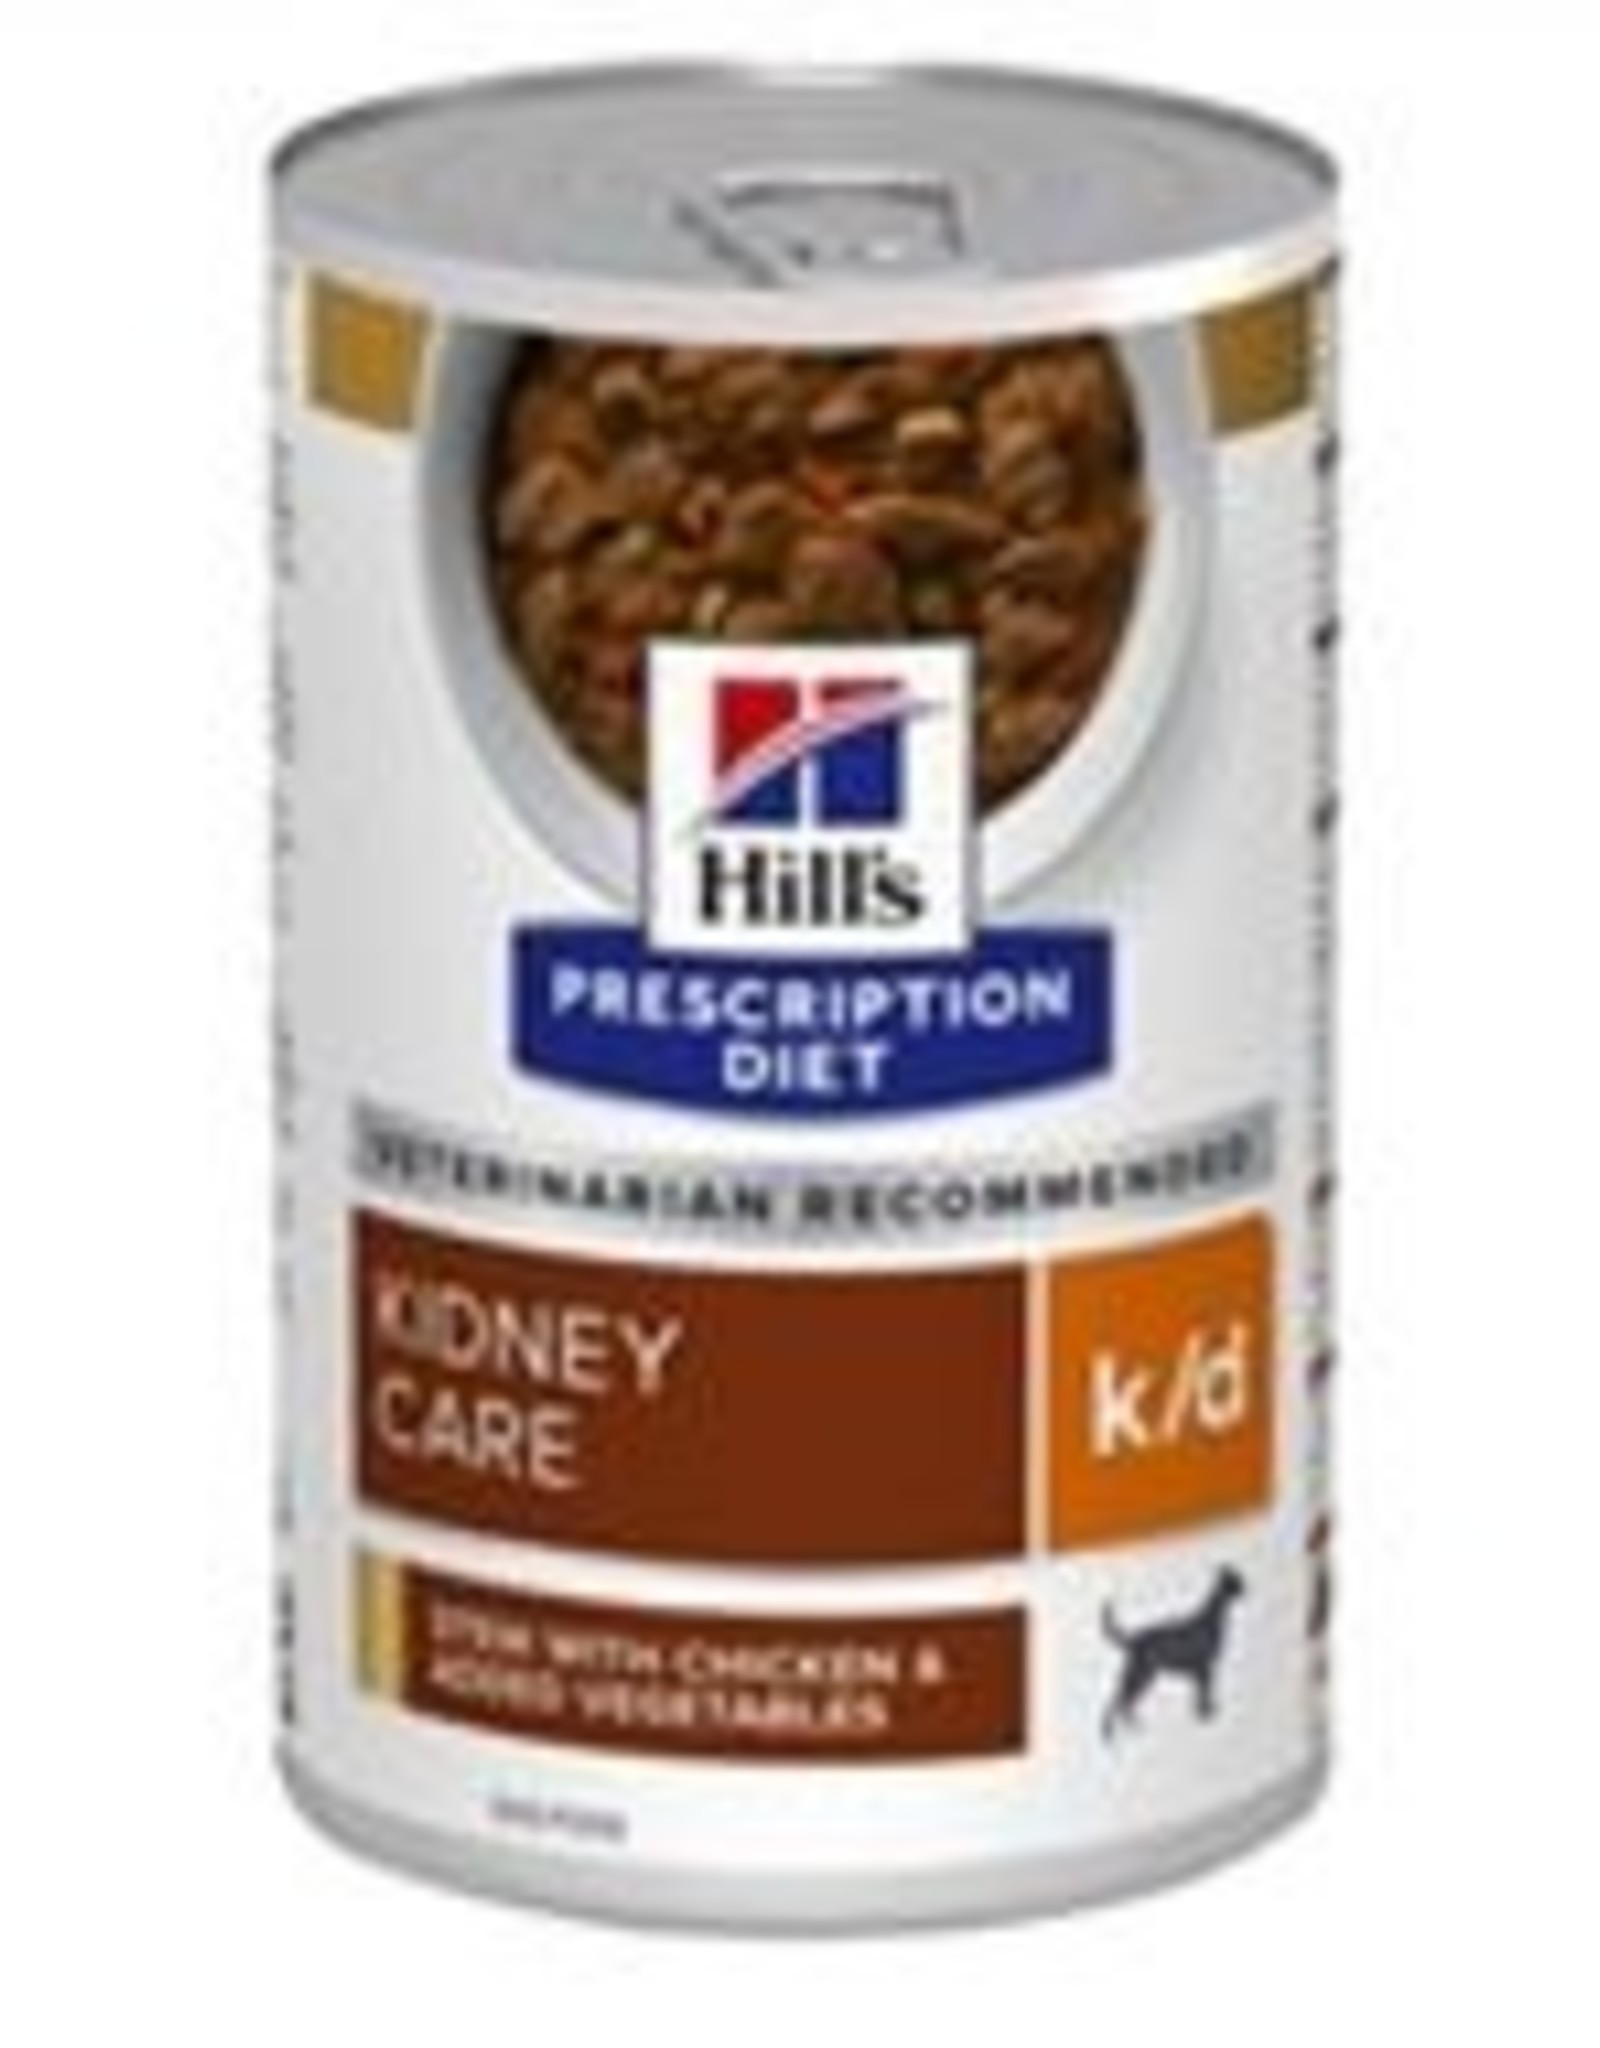 Hill's Hill's Prescription Diet K/d Stew Hund 12x354gr